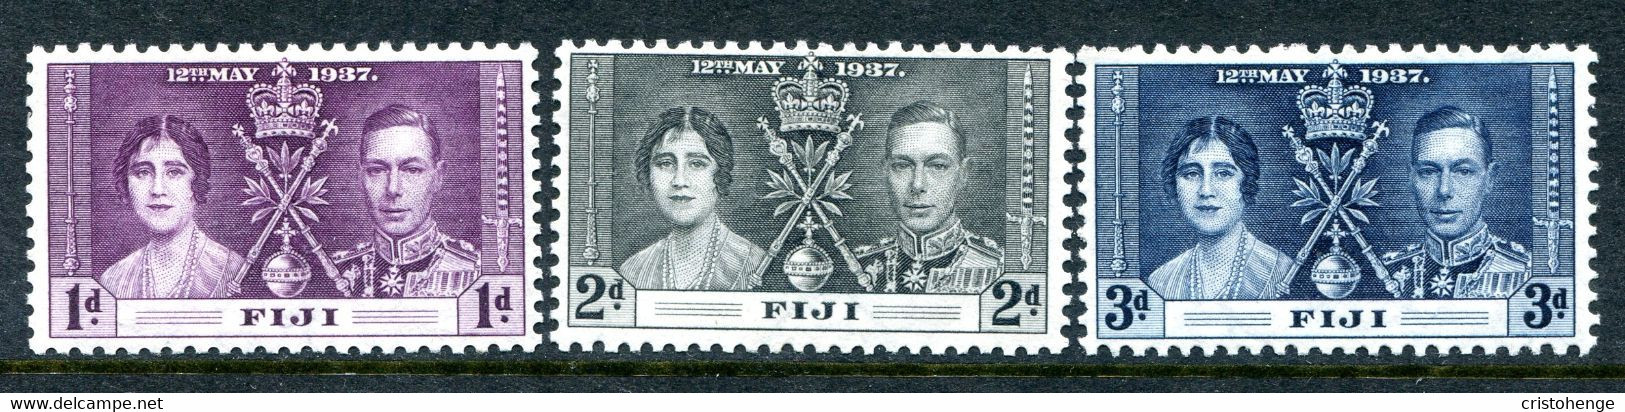 Fiji 1937 KGVI Coronation Set HM (SG 246-248) - Fiji (...-1970)